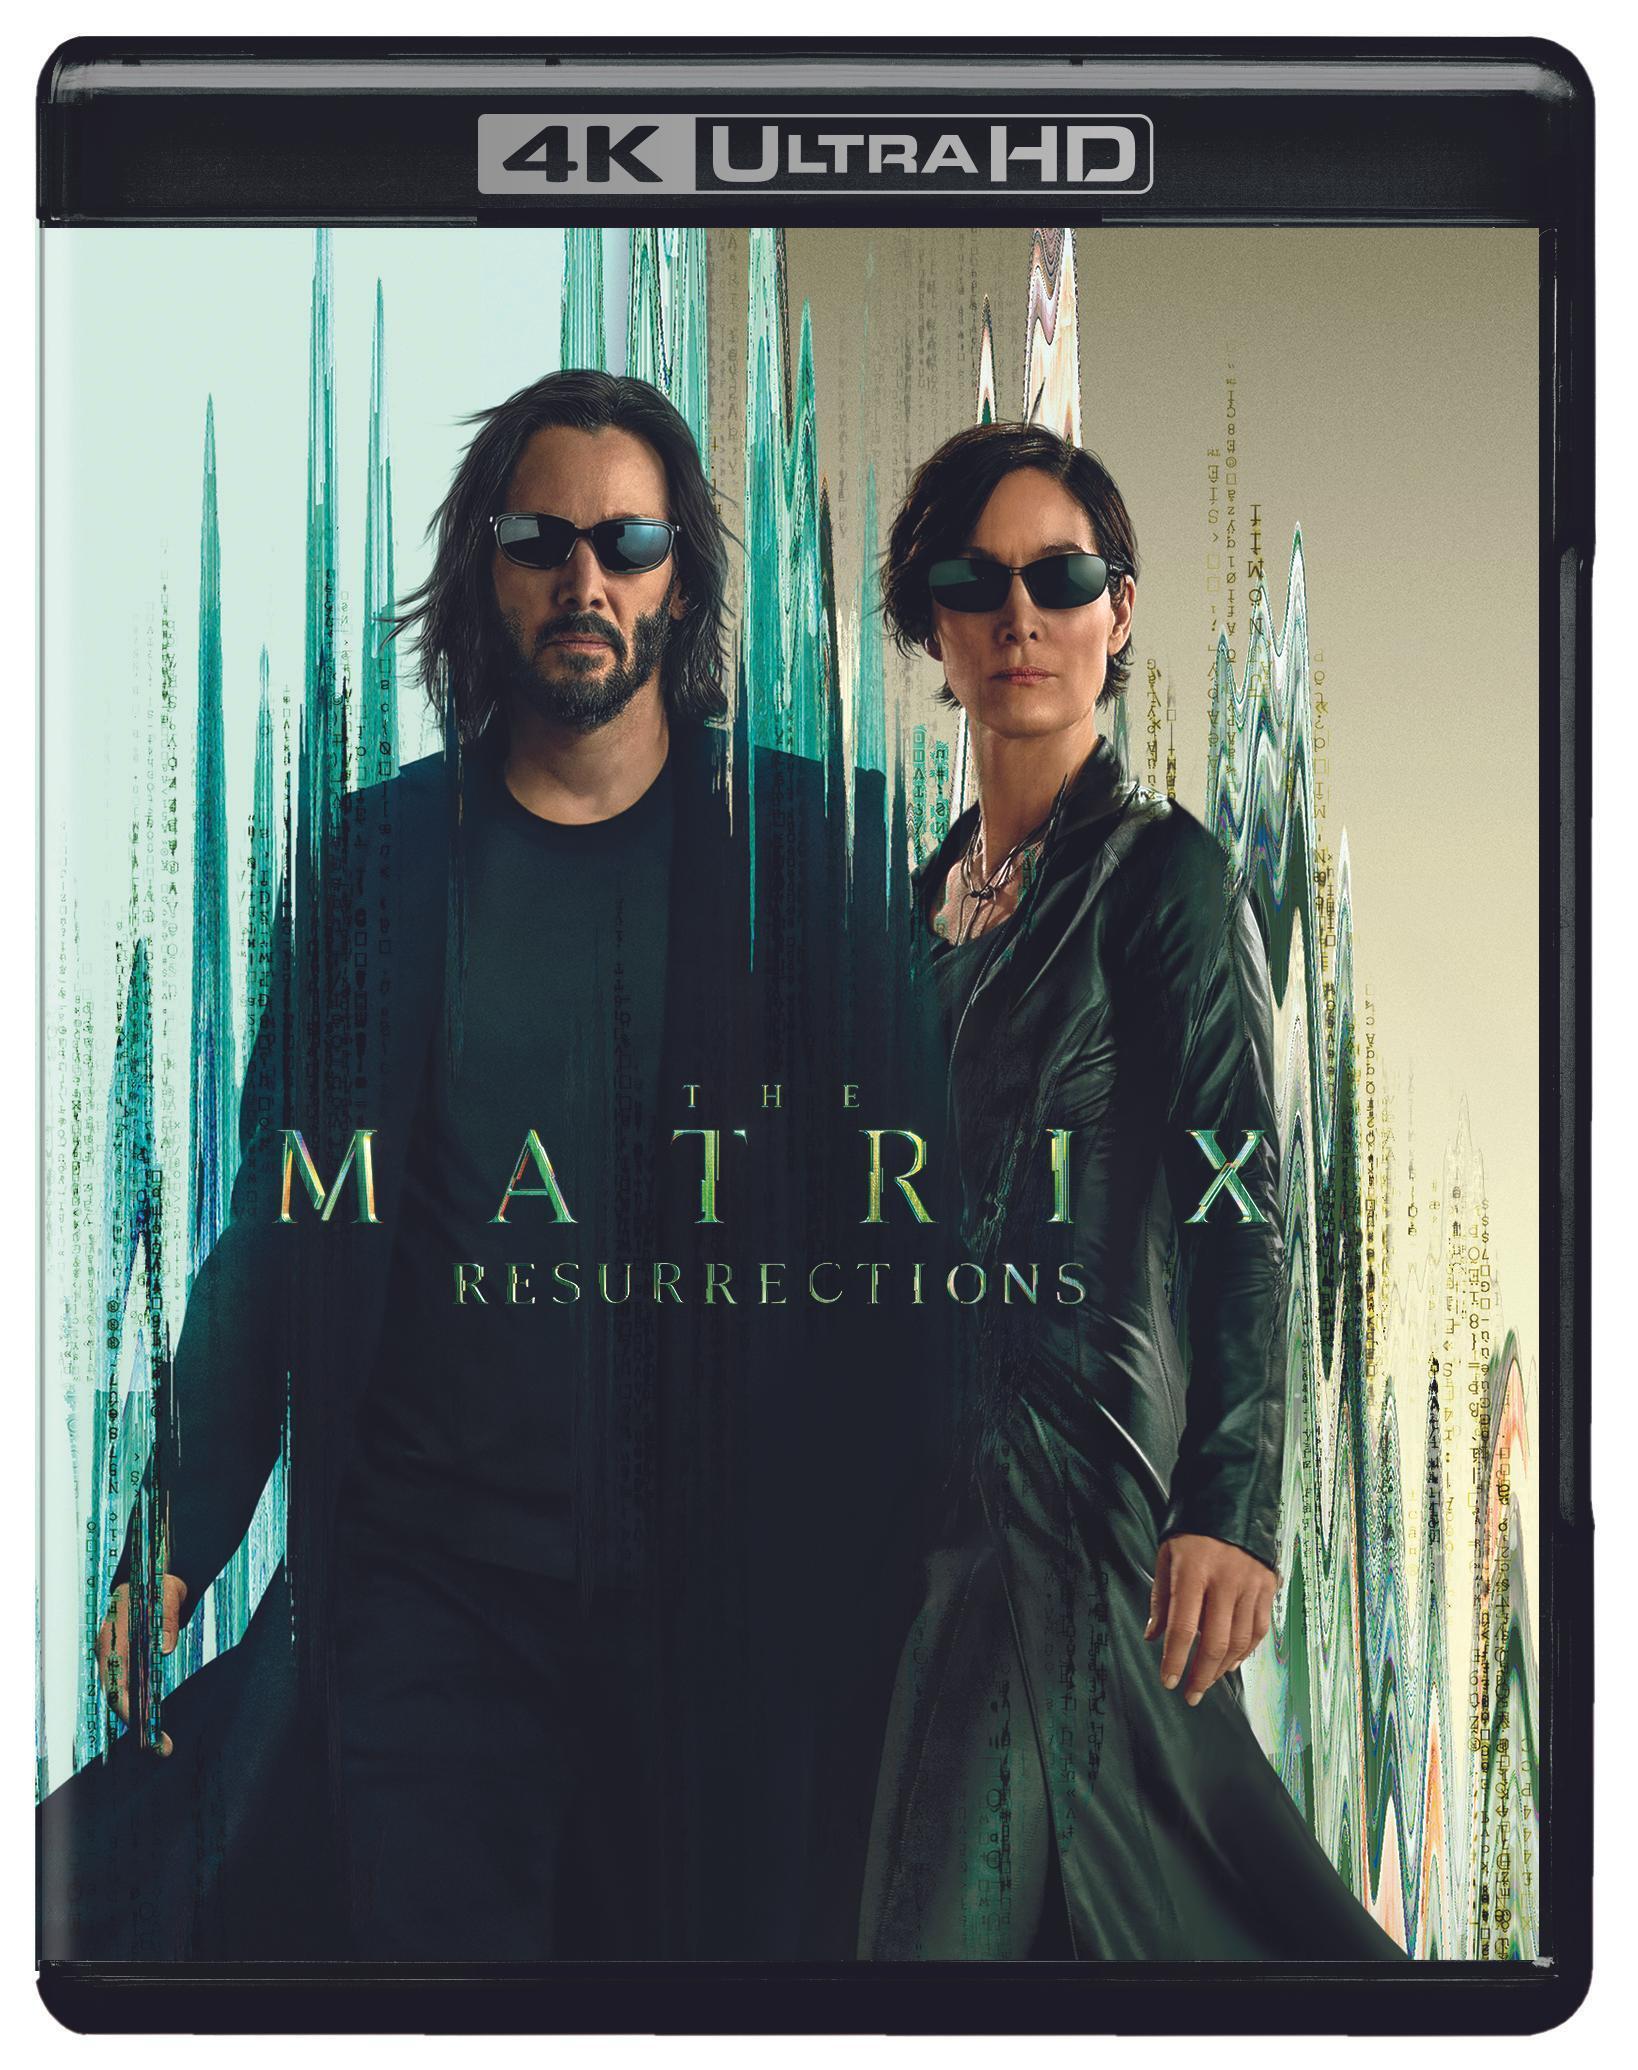 The Matrix Resurrections (4K Ultra HD + Blu-ray) - UHD [ 2021 ]  - Sci Fi Movies On 4K Ultra HD Blu-ray - Movies On GRUV